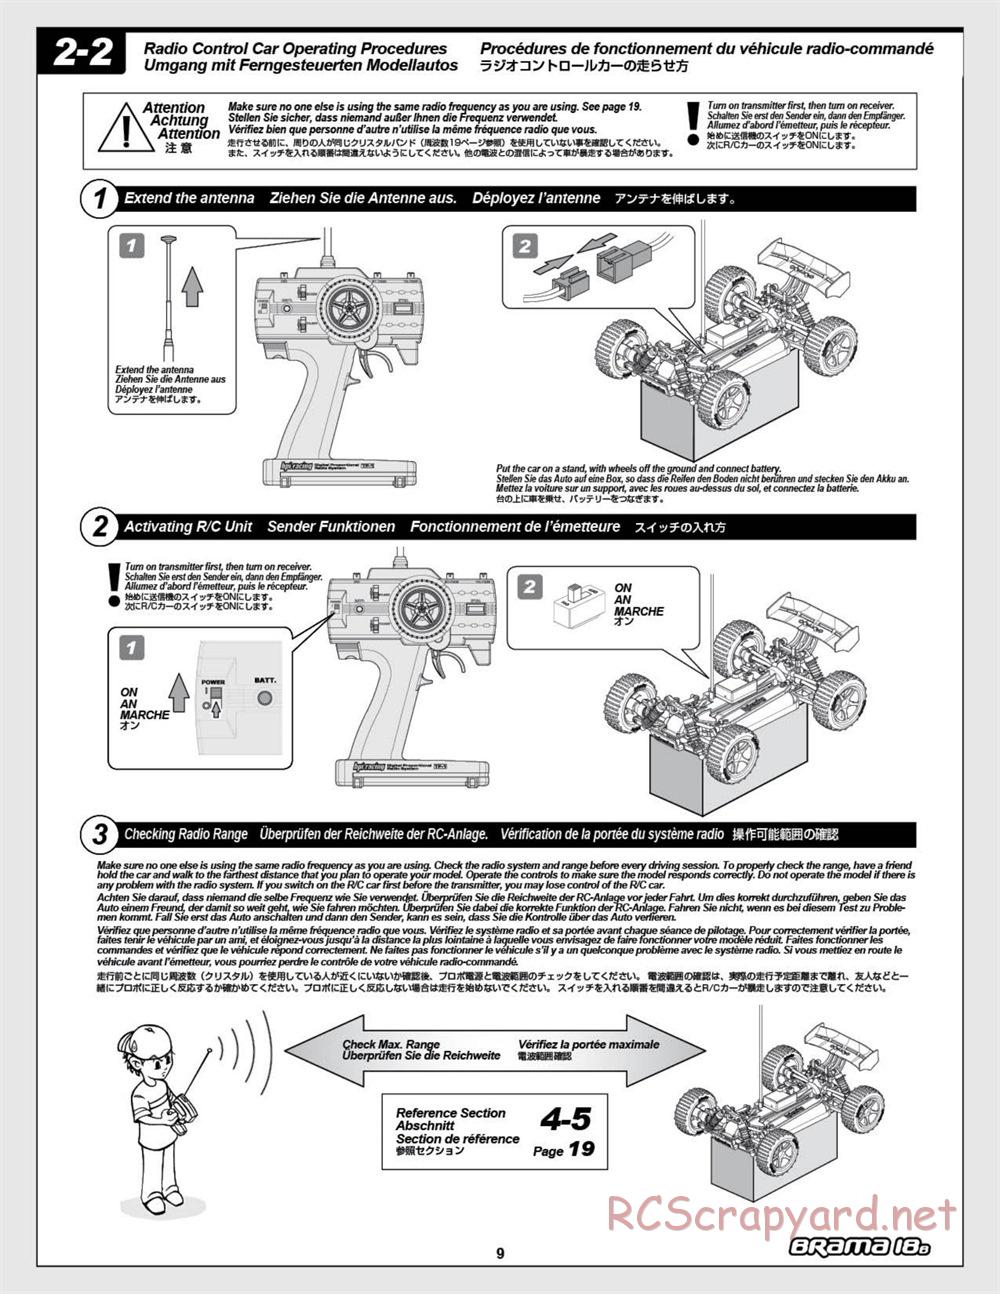 HPI - Brama 18B - Manual - Page 9